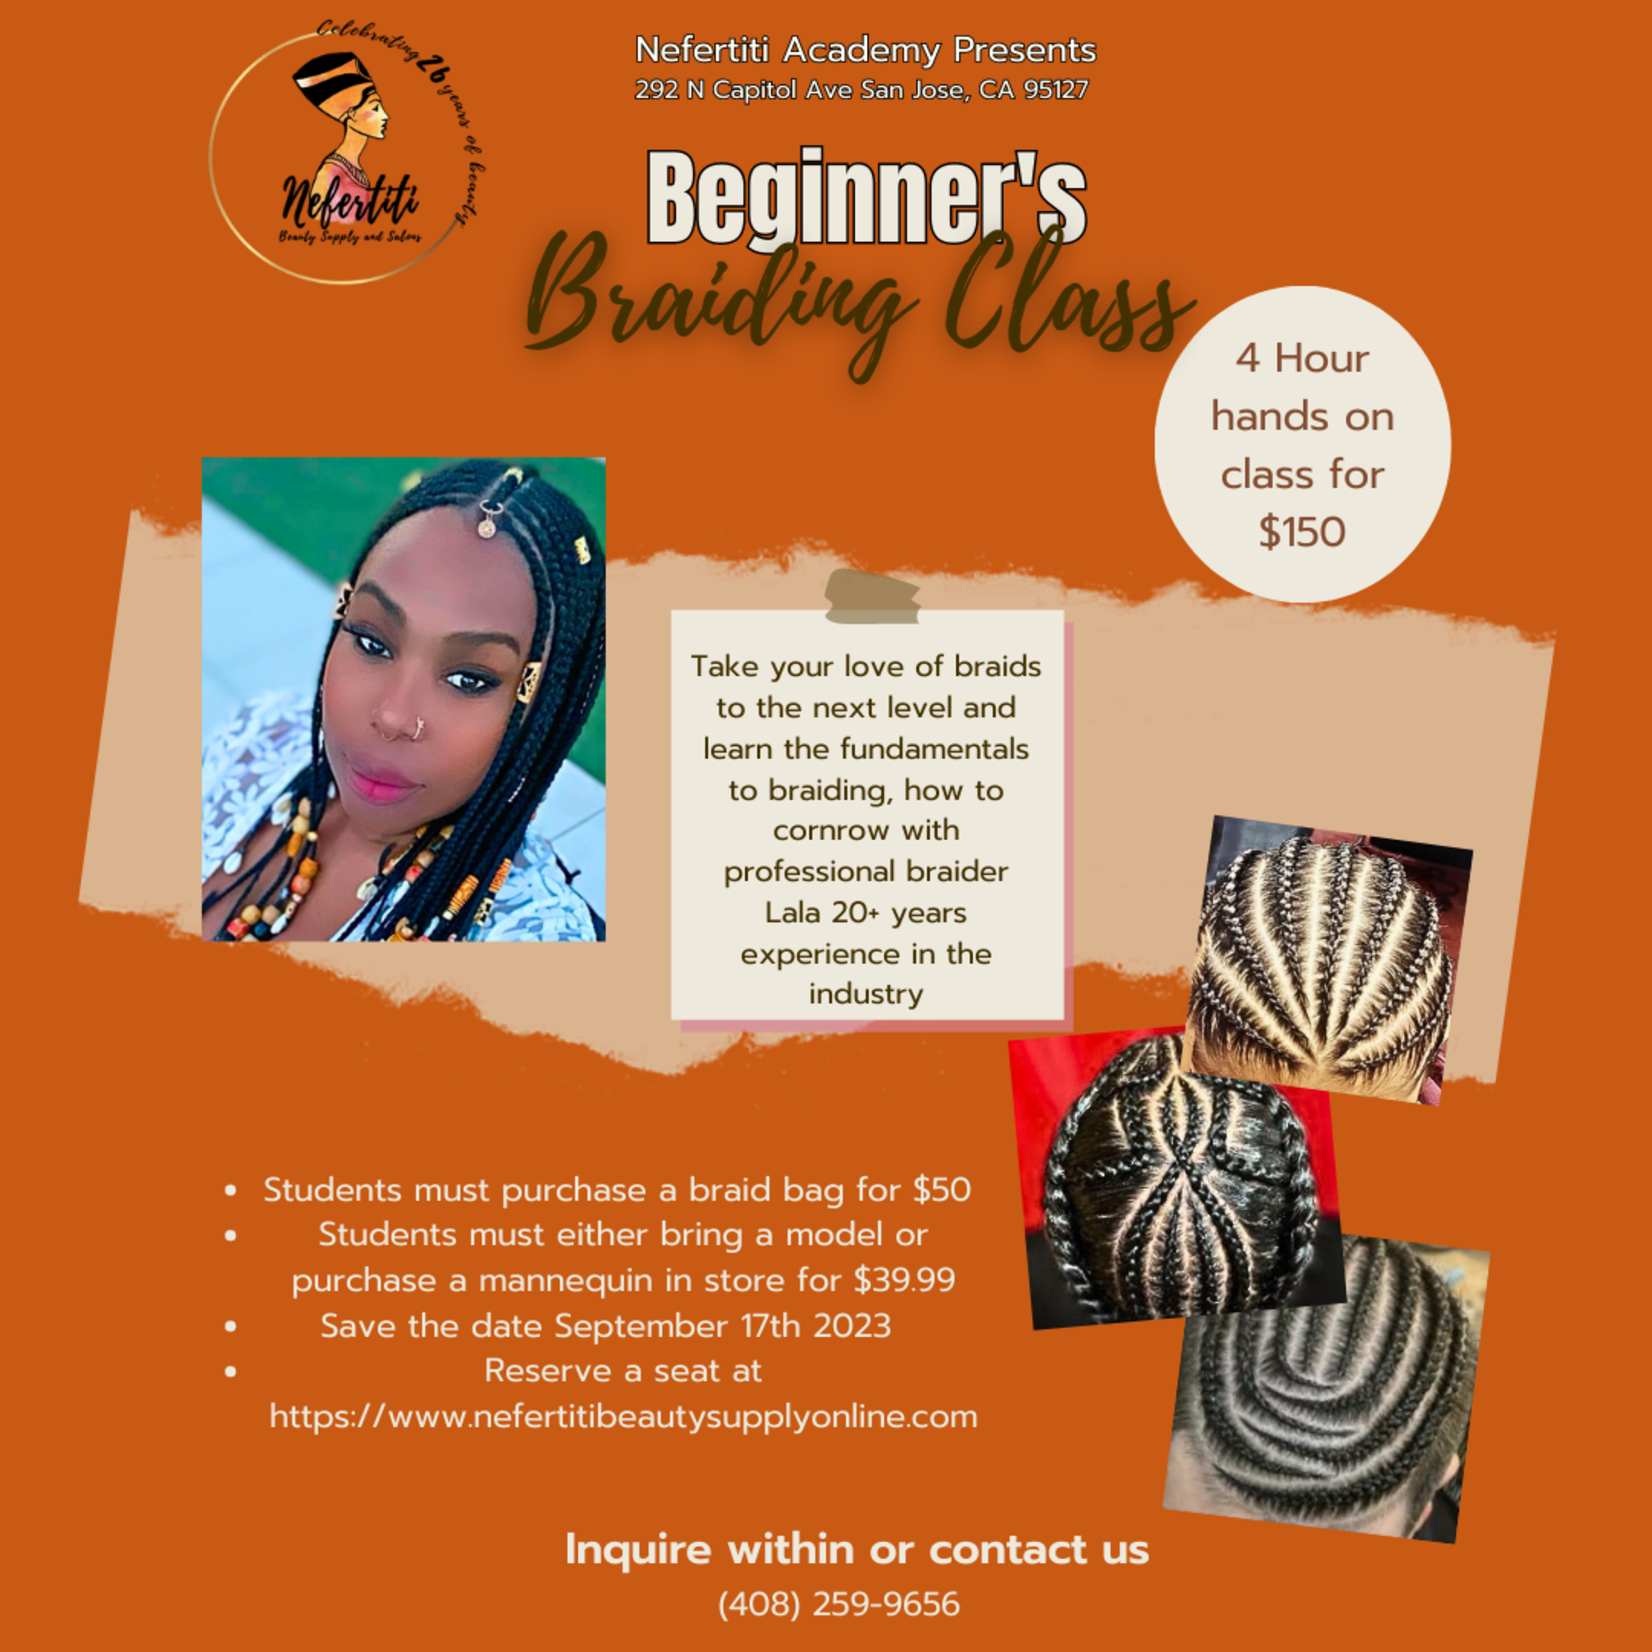 Next Level Salon Nefertiti Academy Presents- Beginner's Braiding Class